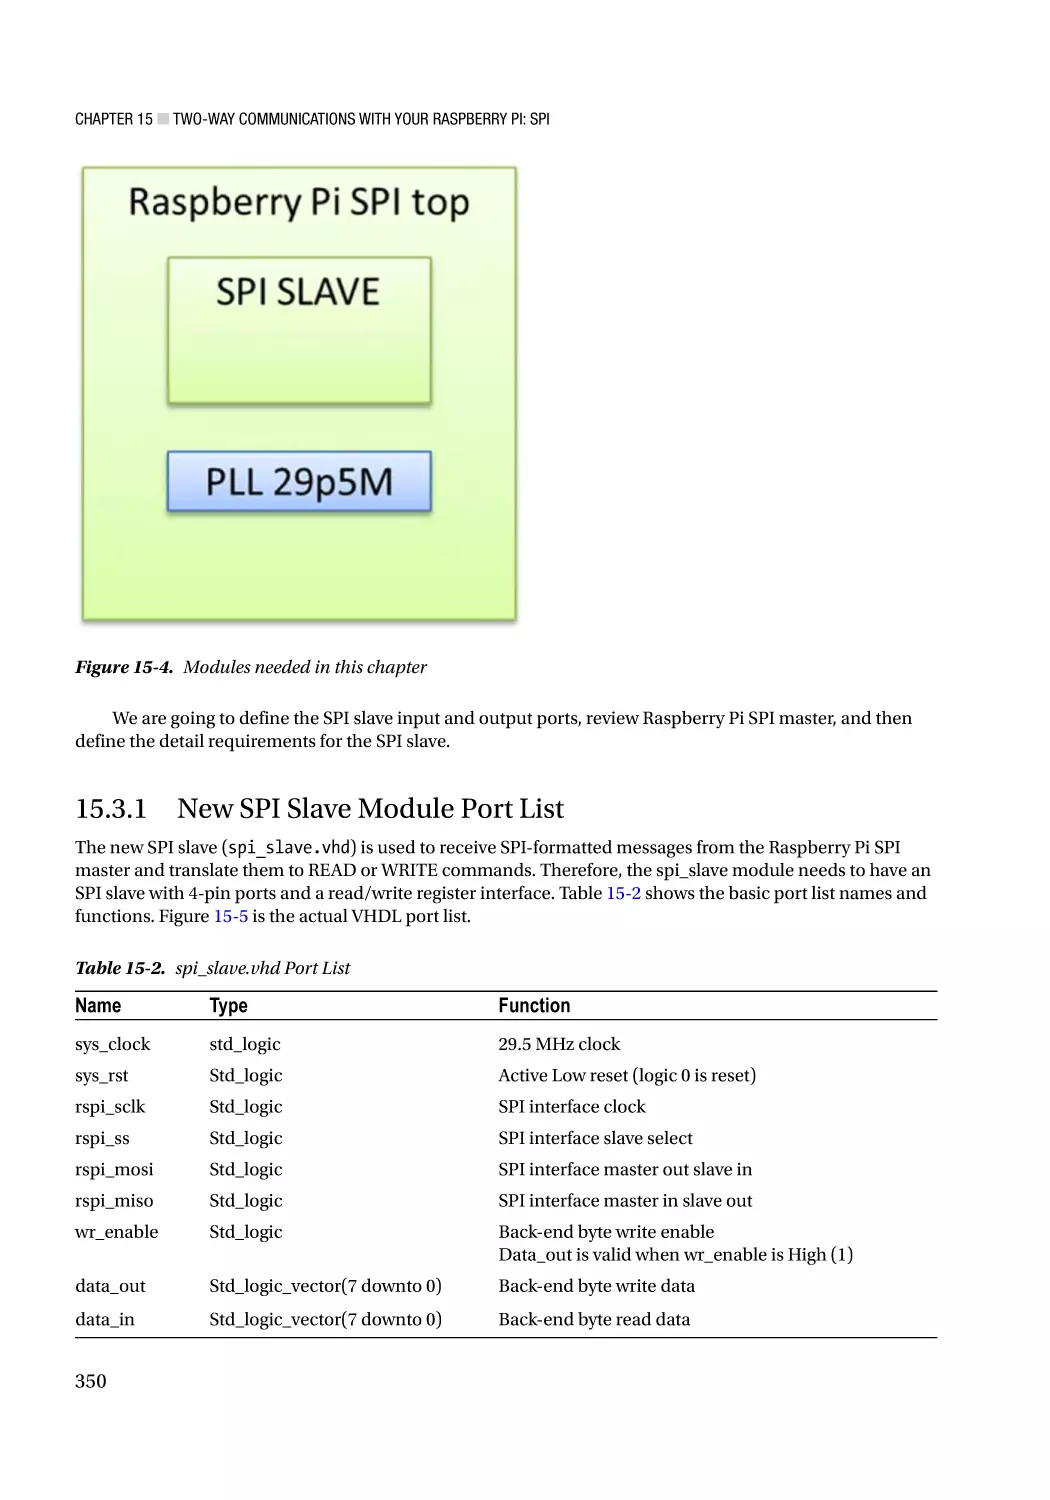 15.3.1 New SPI Slave Module Port List